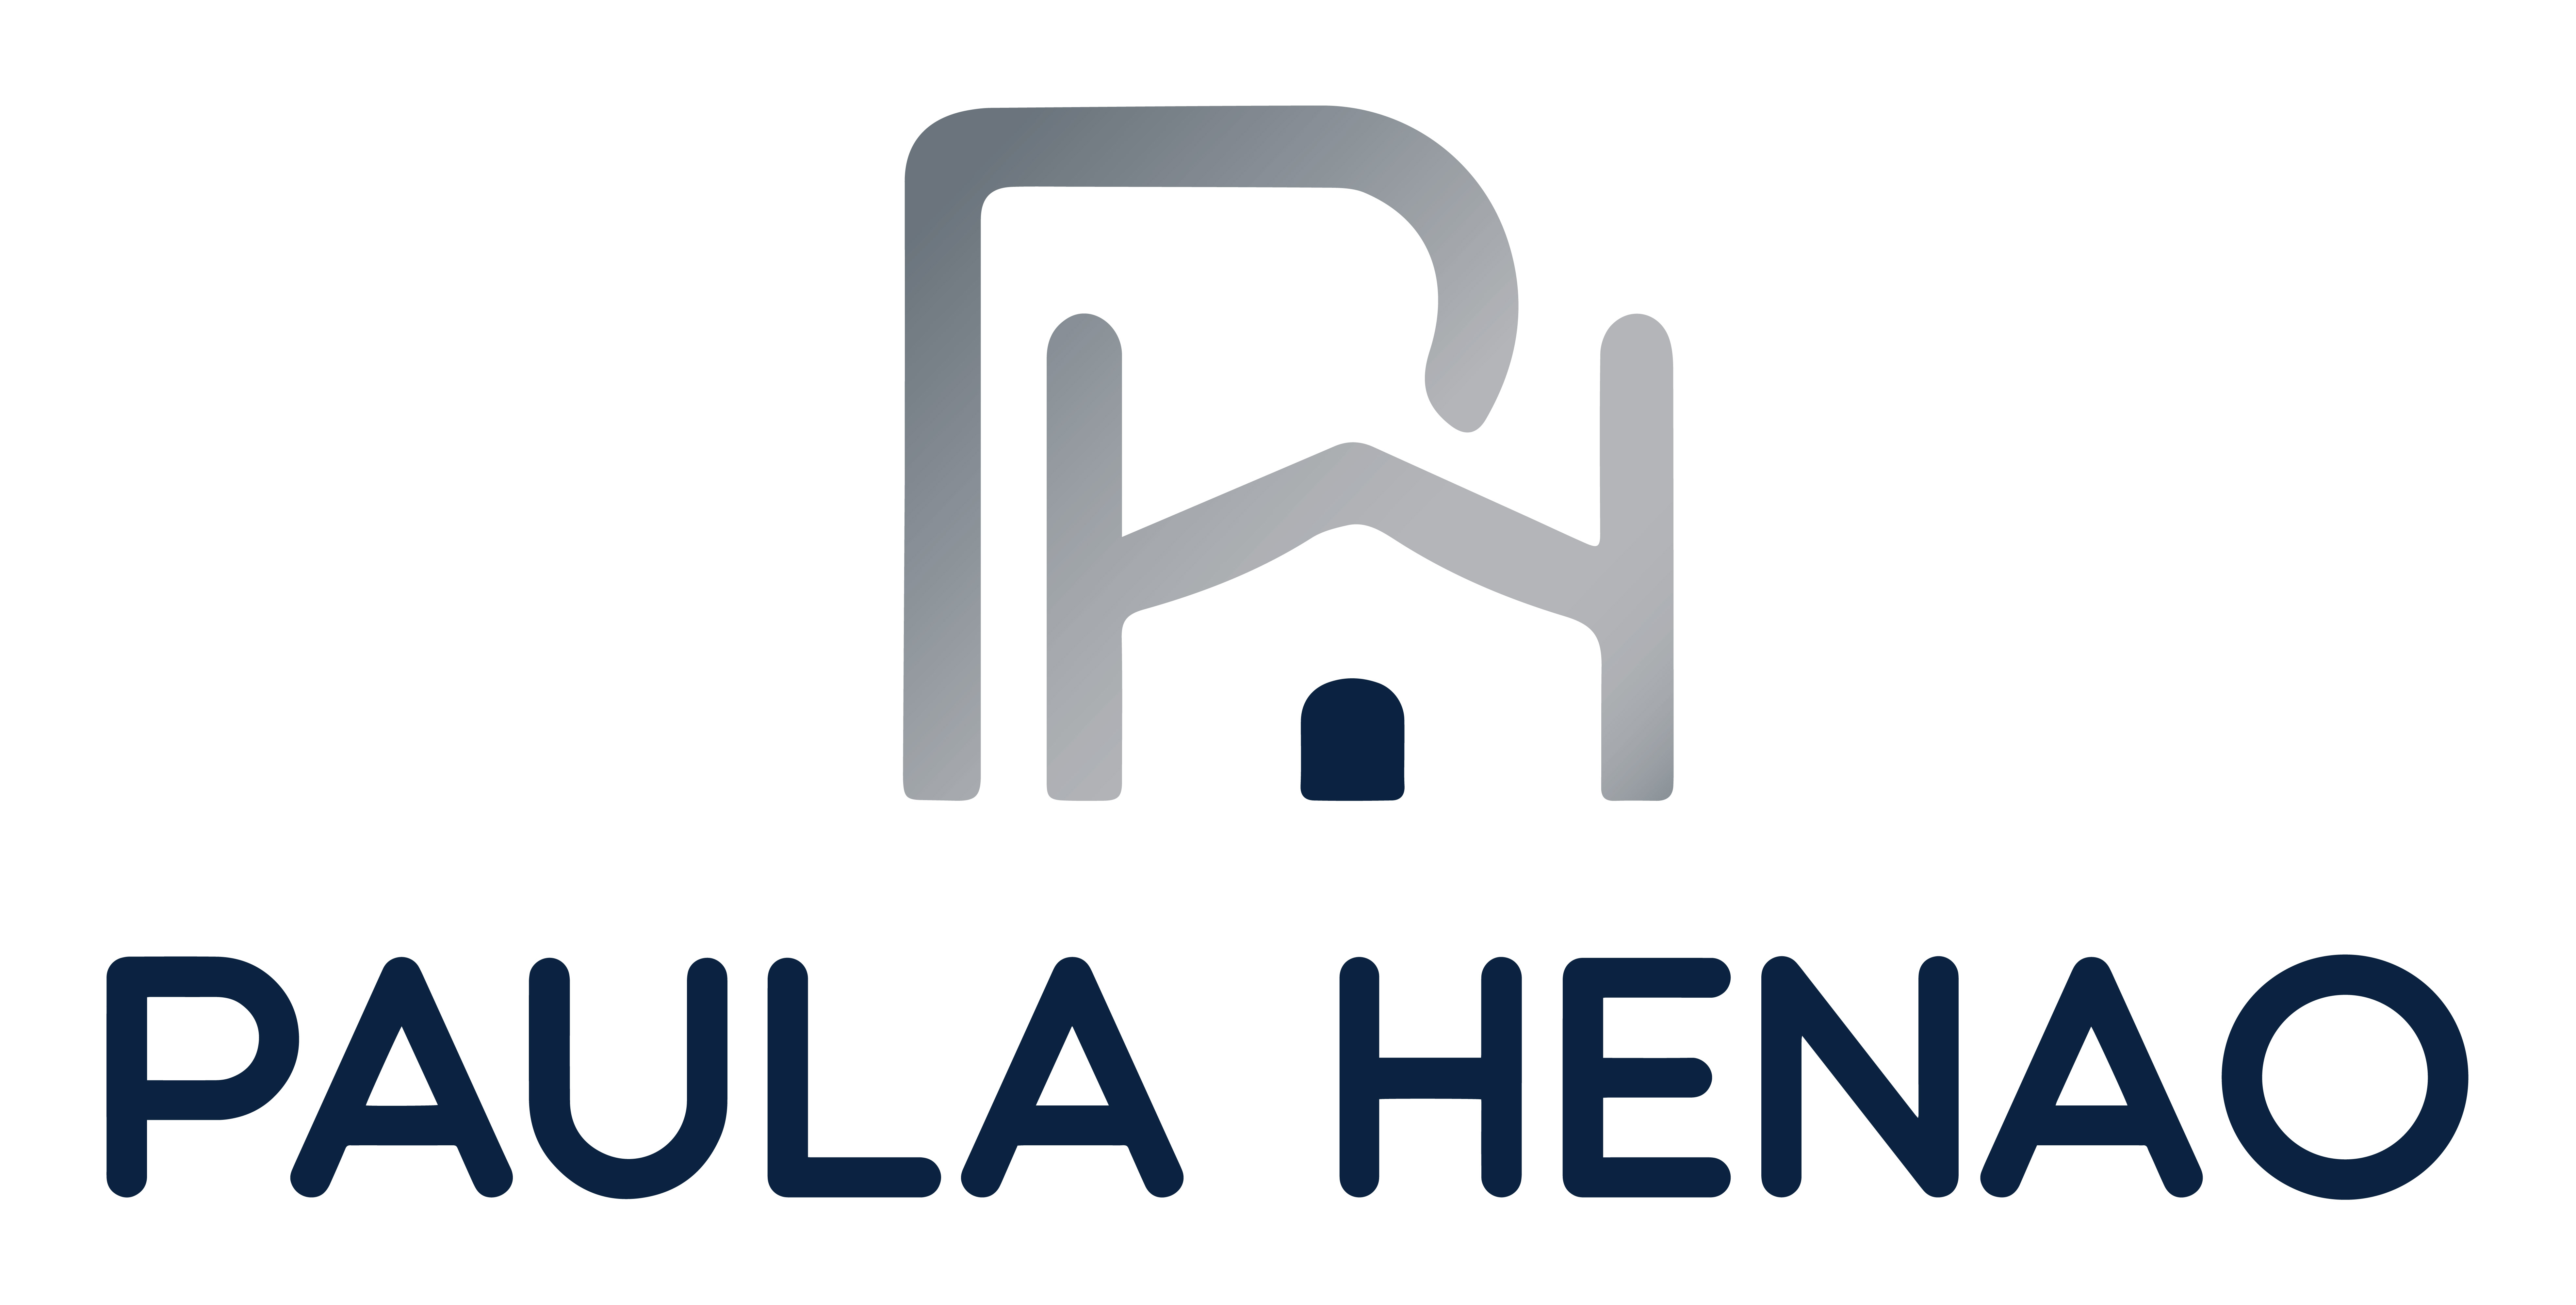 Paula Henao Real Estate Group, Inc.